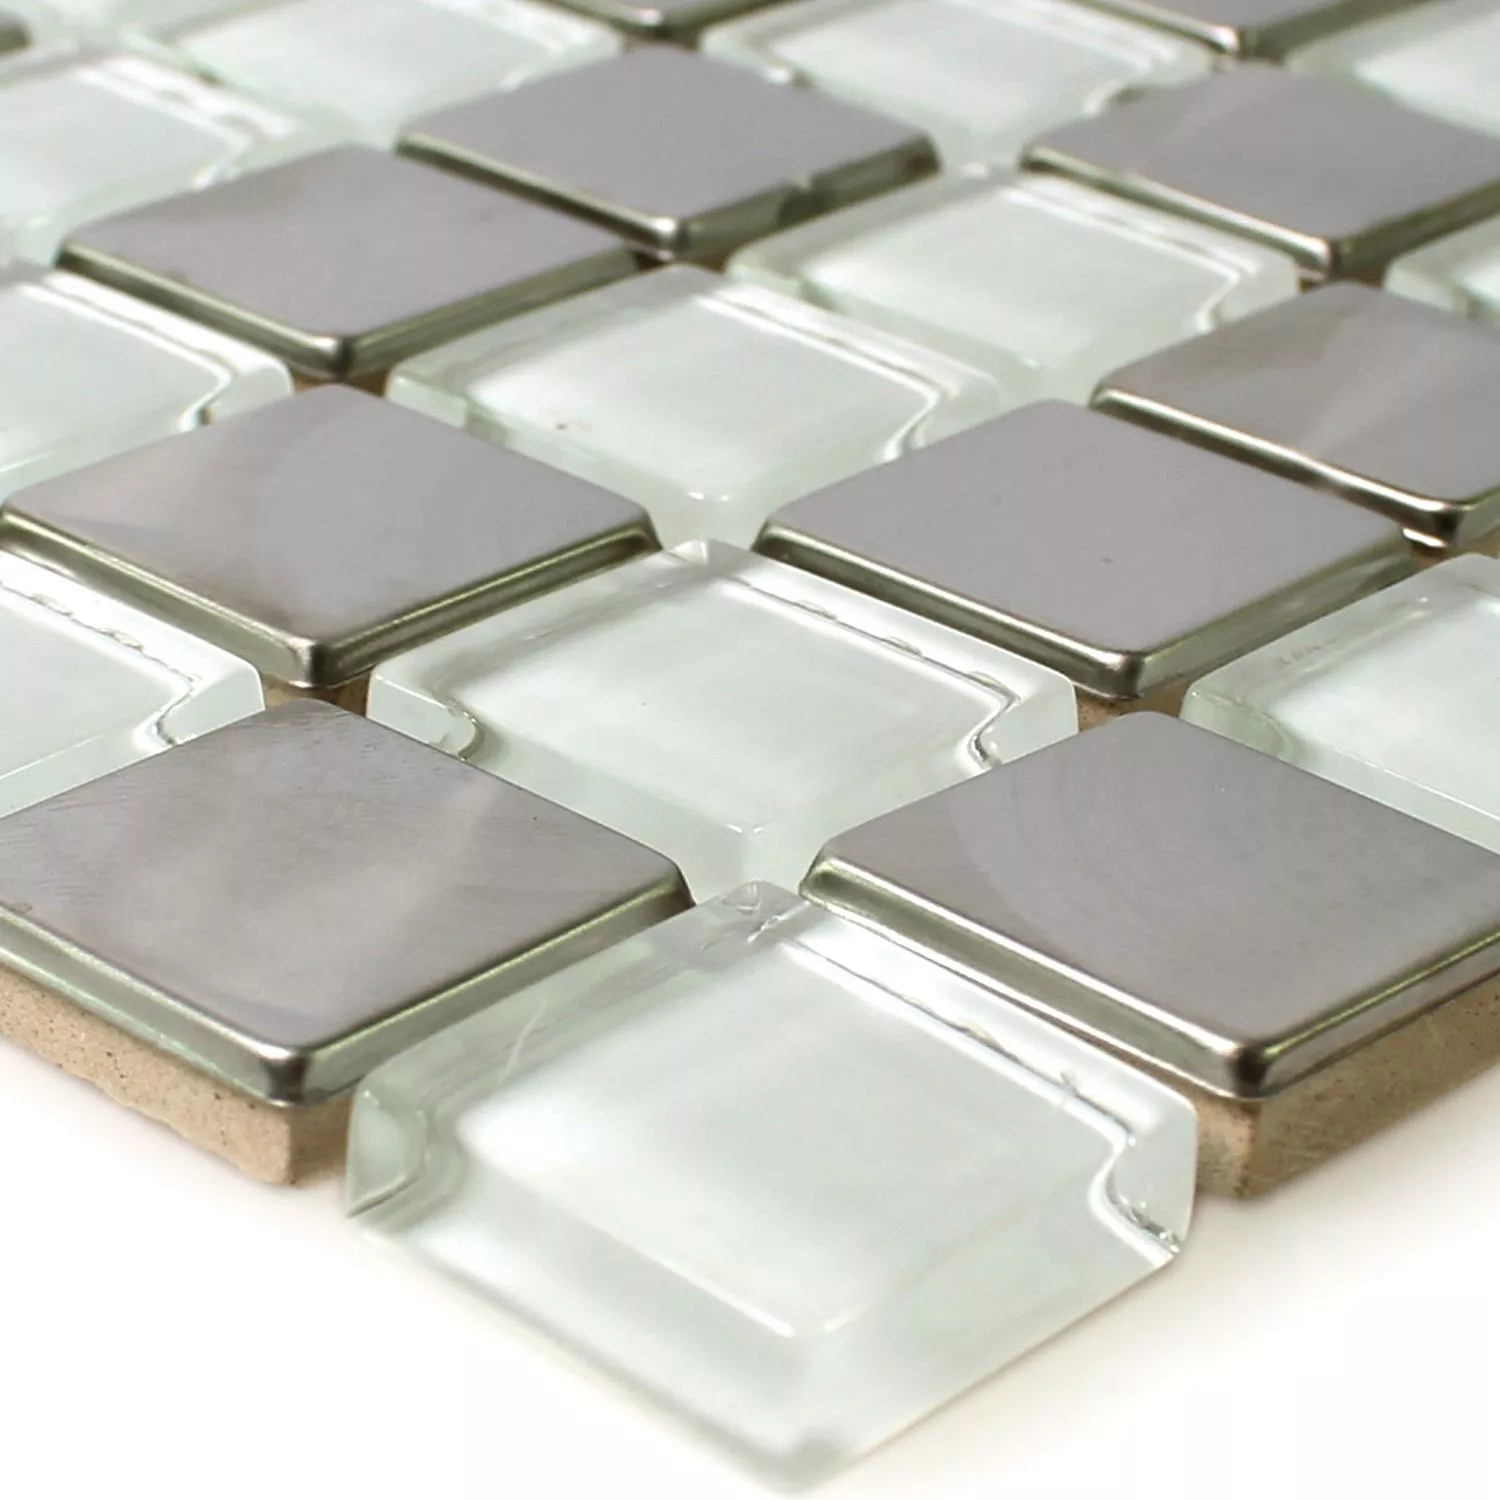 Sample Mosaic Tiles Stainless Steel Glass White